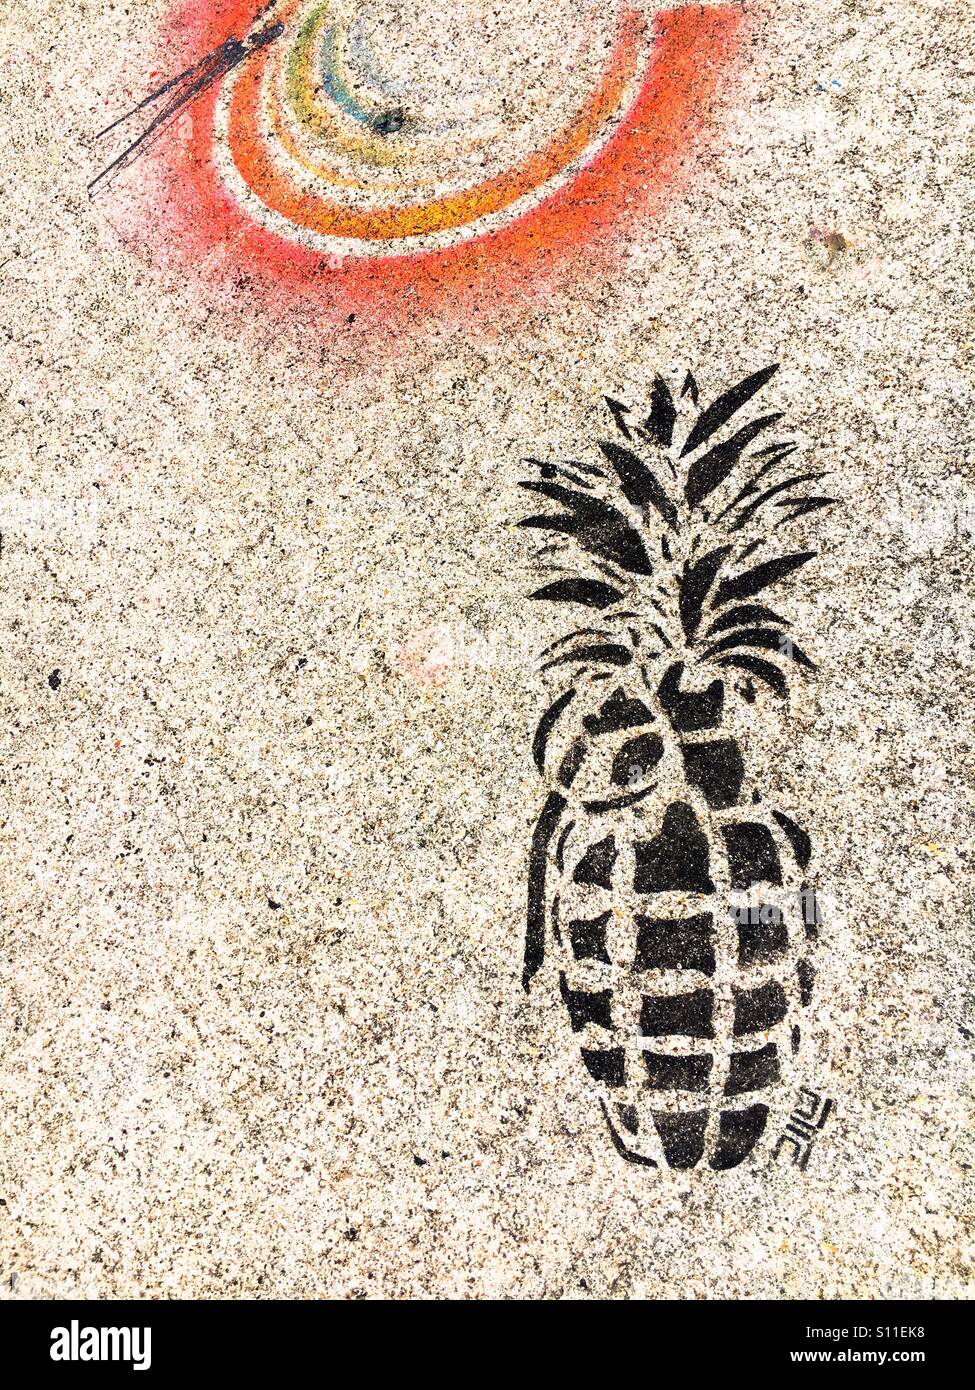 Pineapple hand grenade sidewalk art Stock Photo